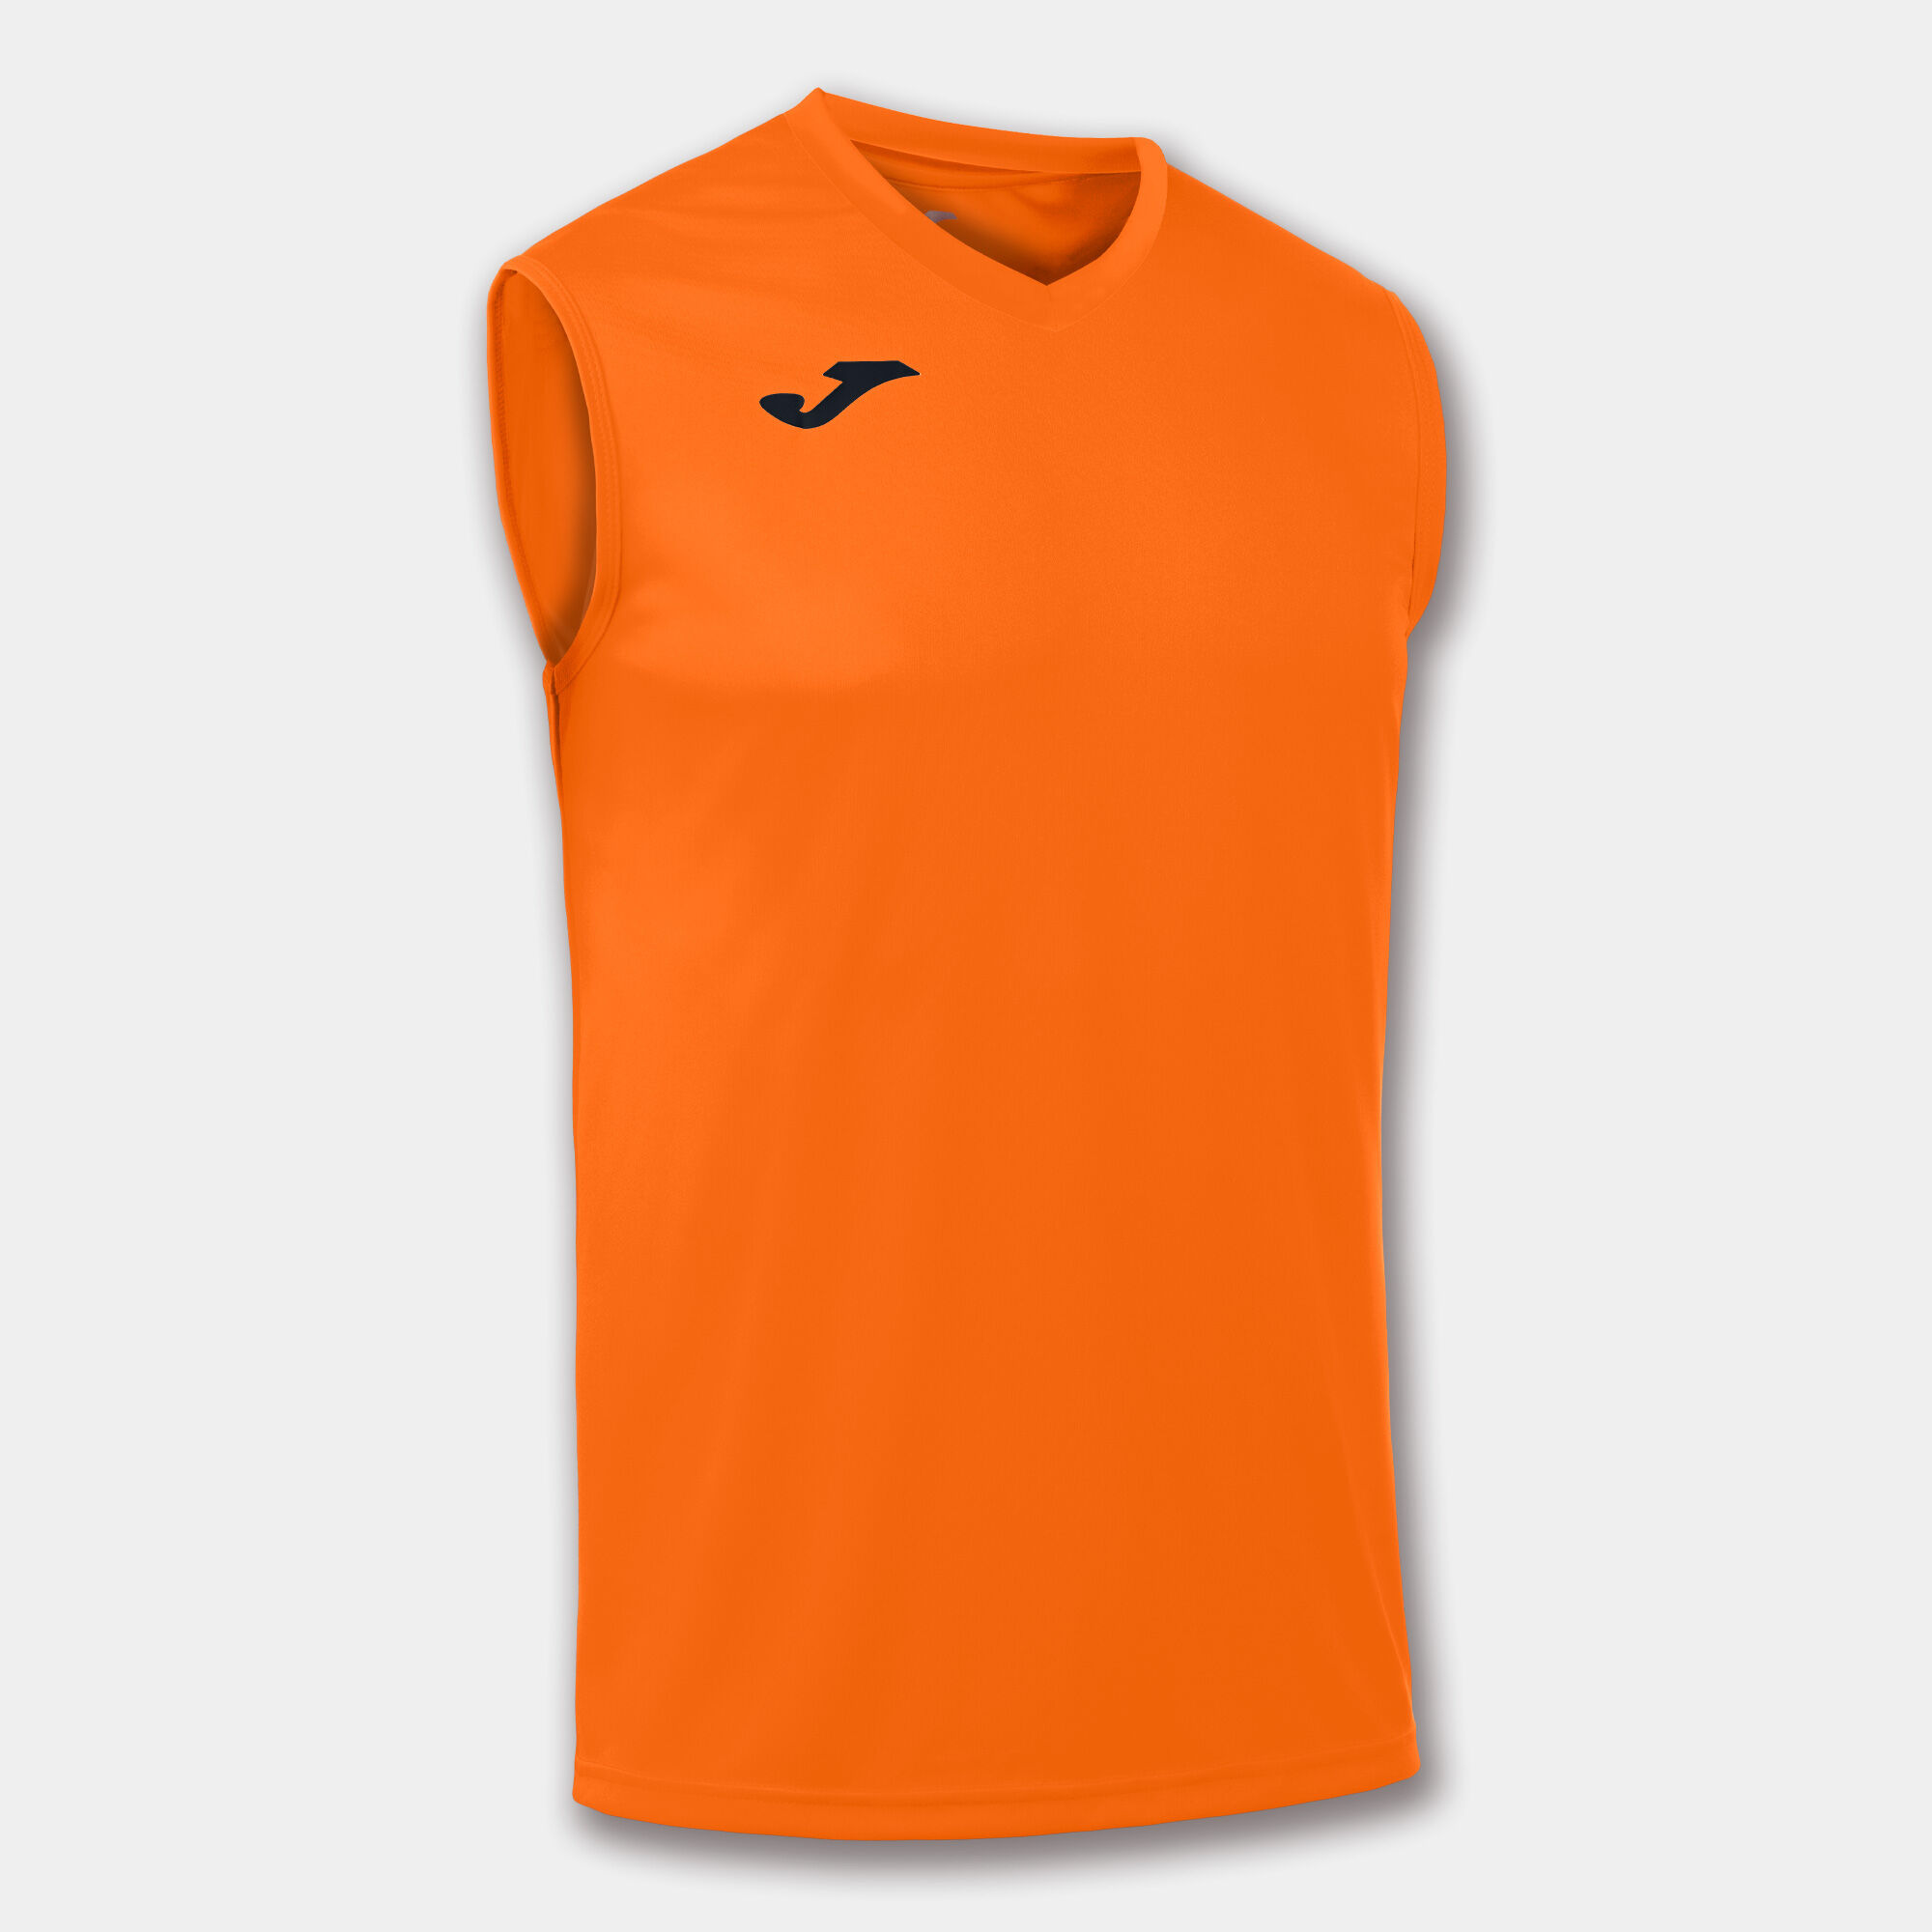 Camiseta mangas hombre naranja